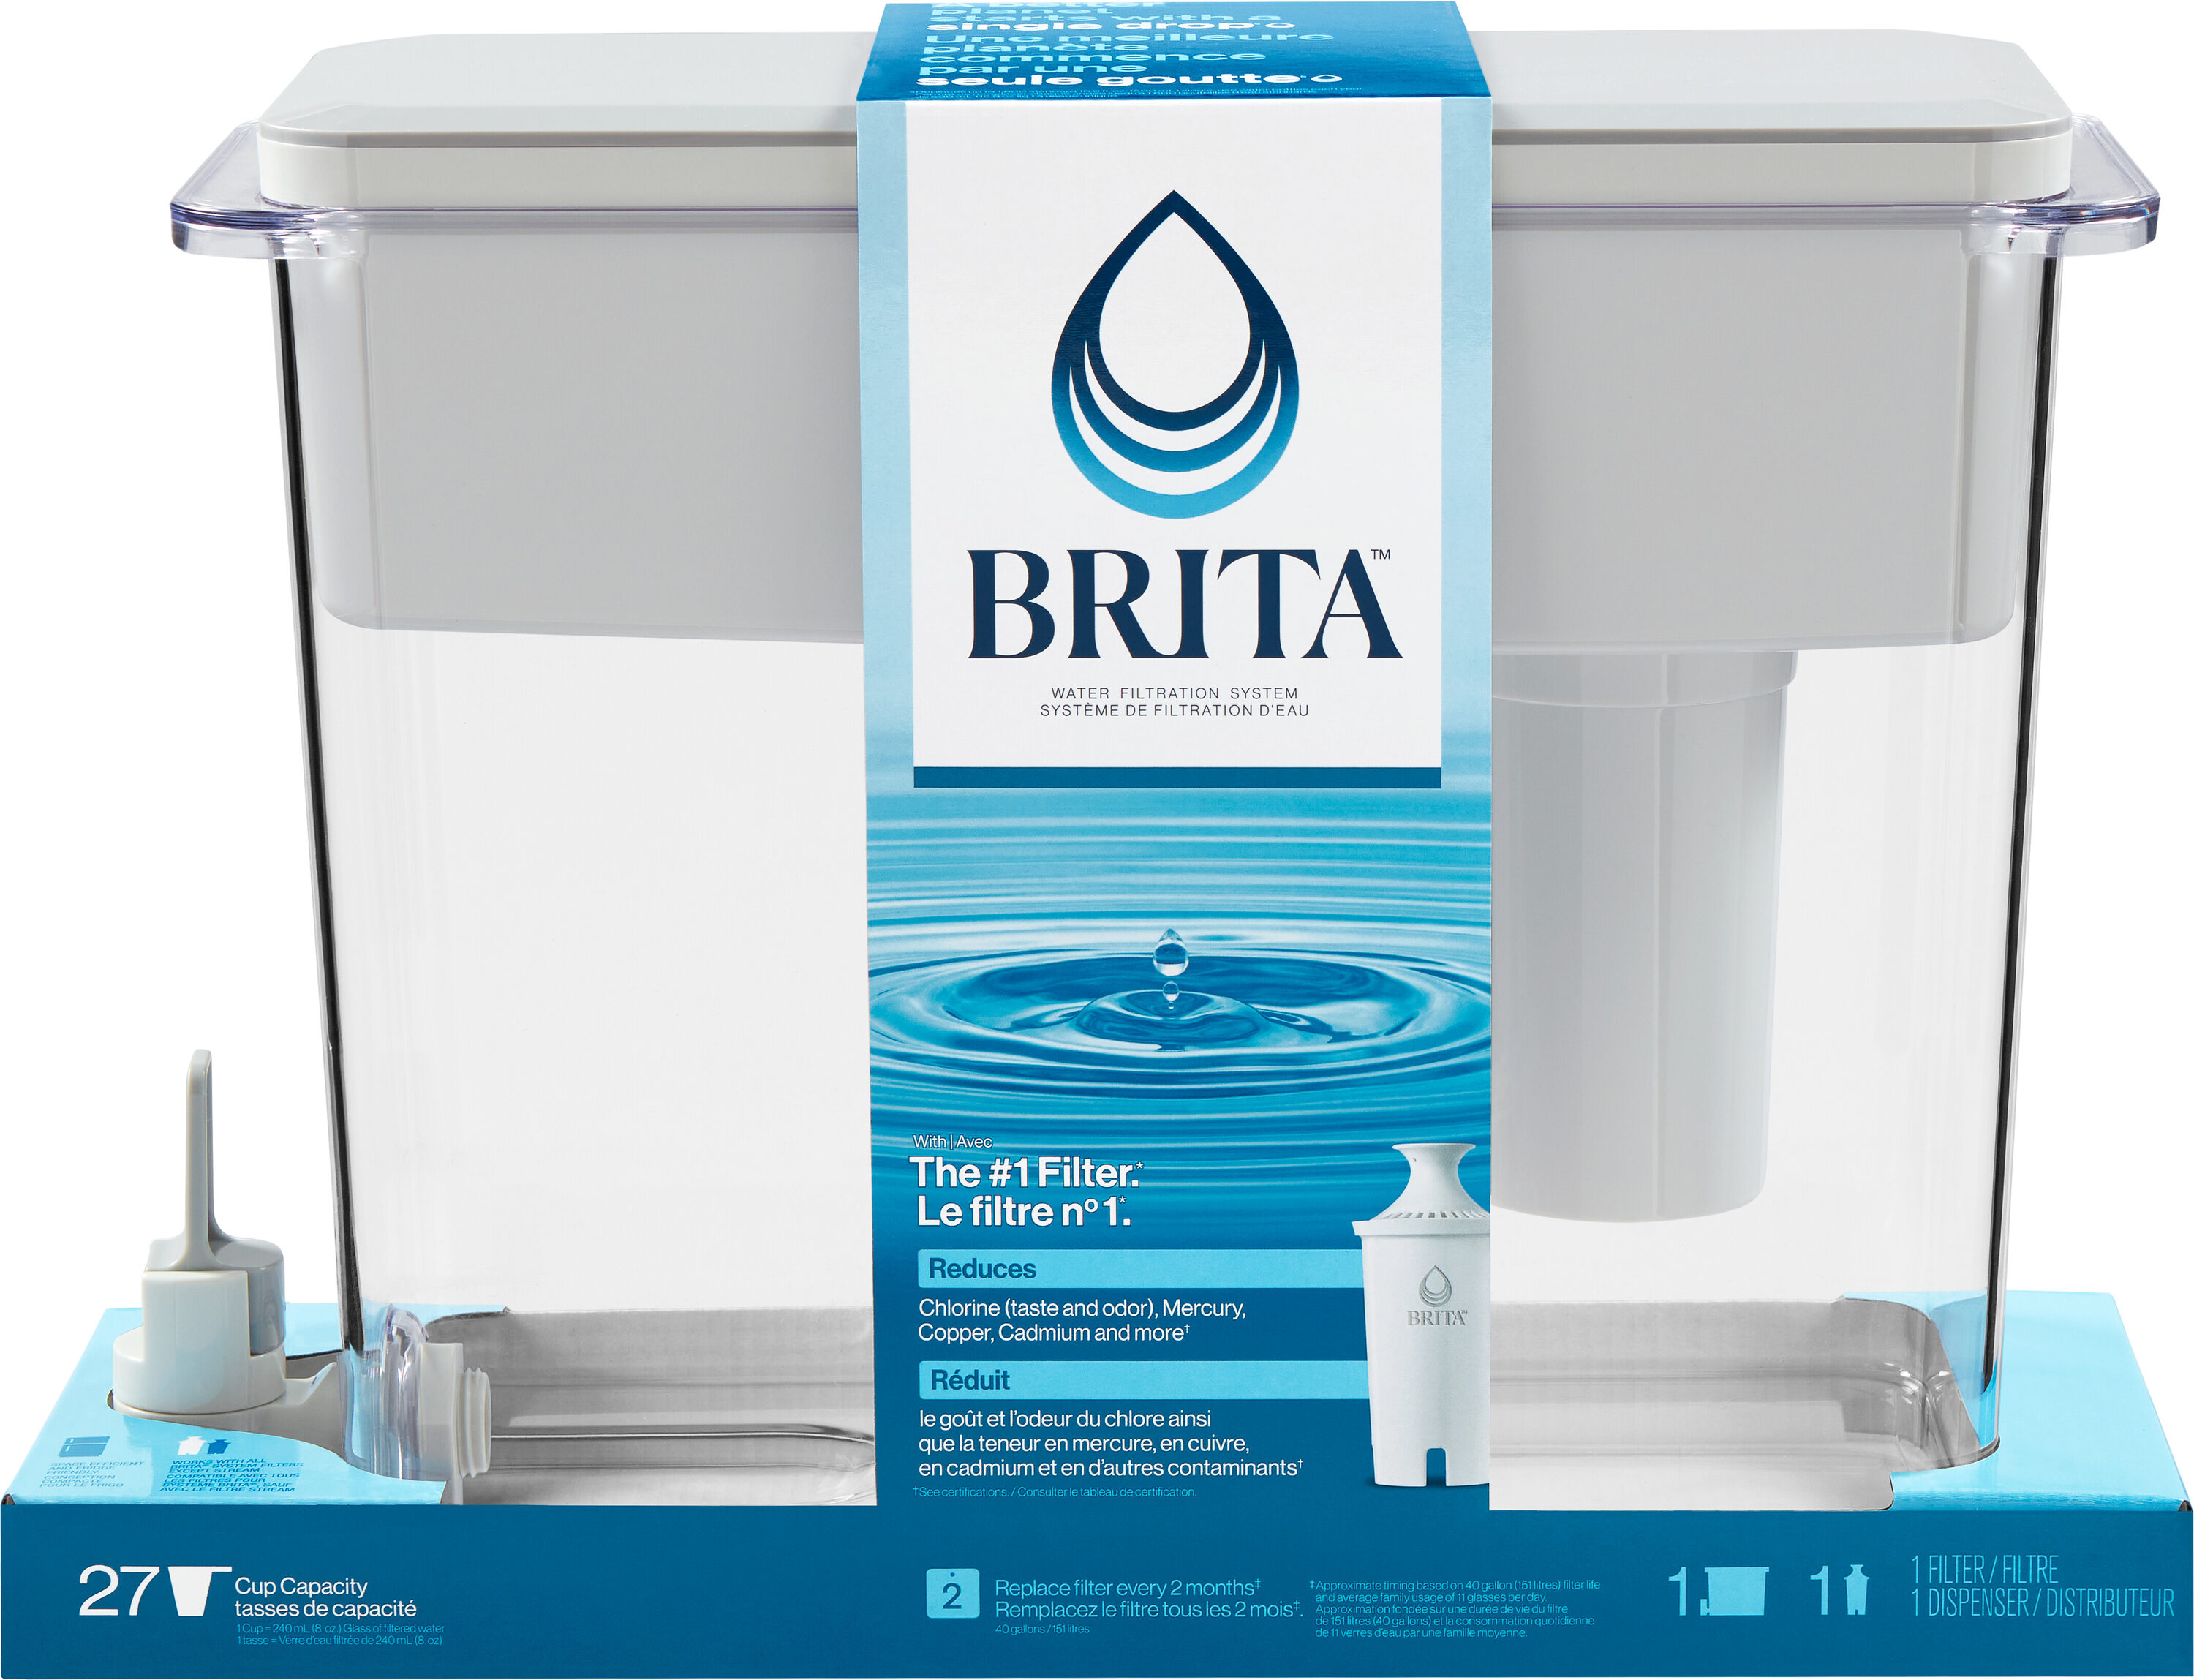 Brita Clorox Filter Value Pack For Brita Pitchers And Dispensers - Office  Depot